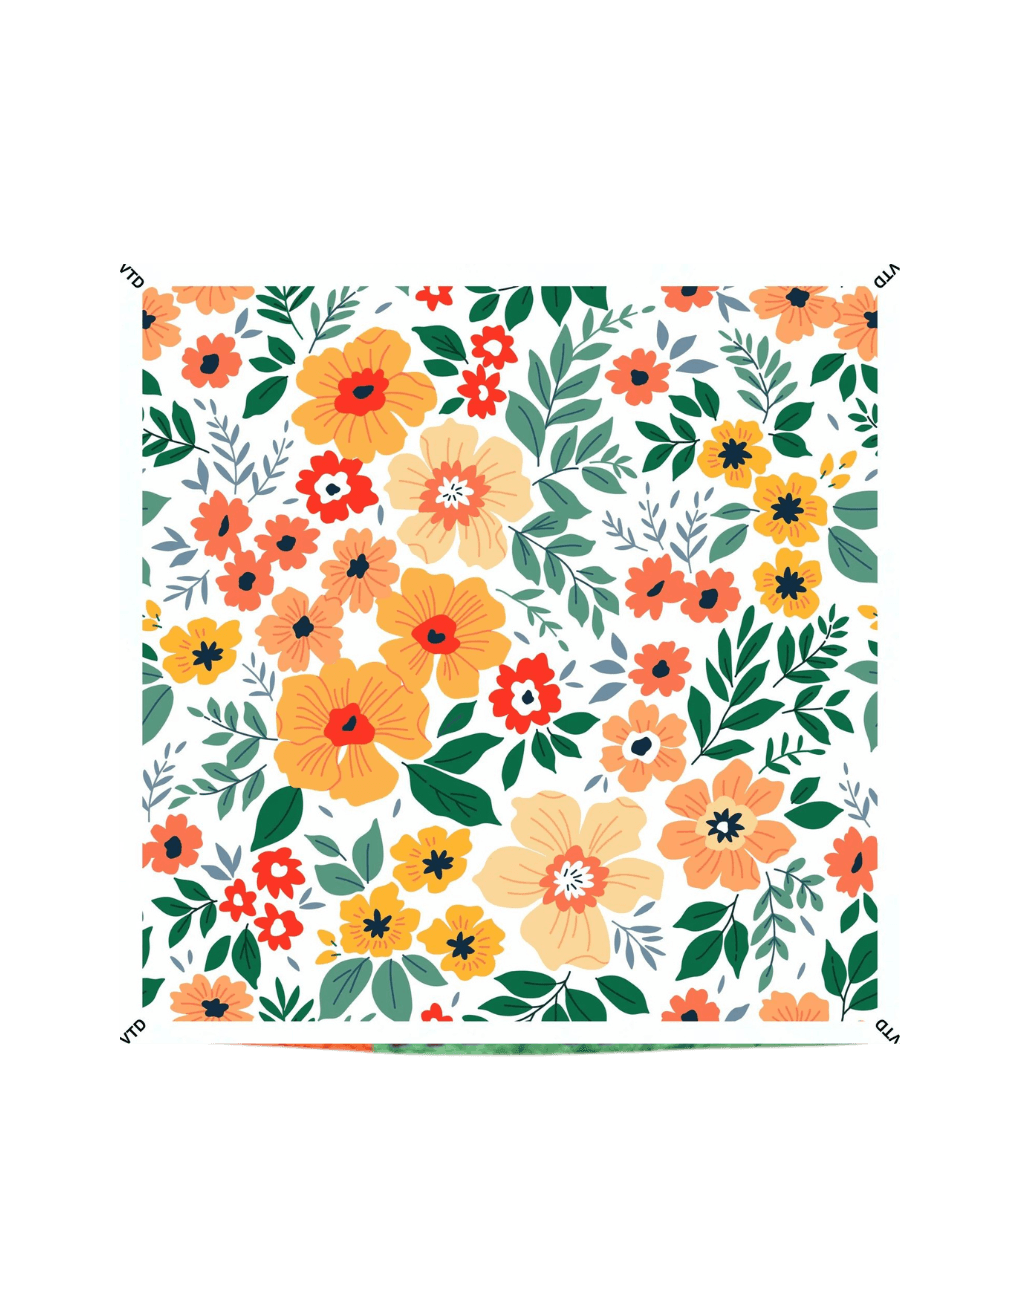 Pañuelo Verb to Do 4 en 1 Orange Flowers - ECRU